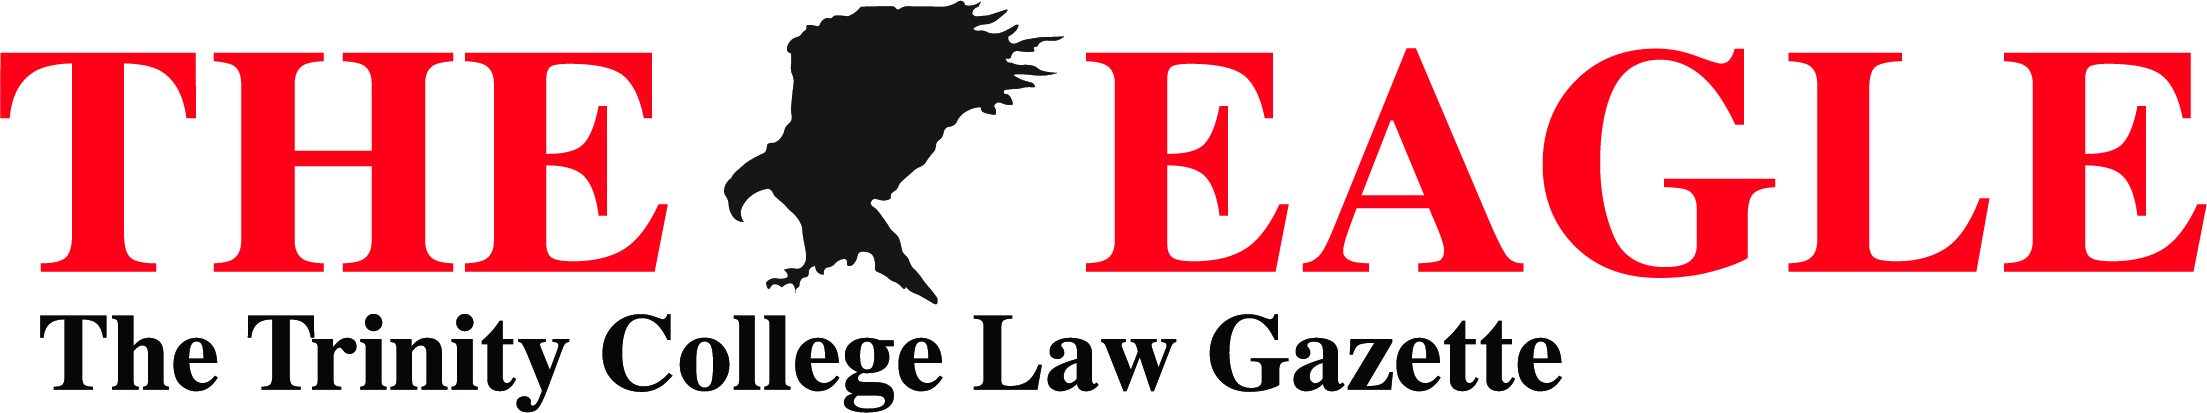 The Eagle: Trinity College Law Gazette